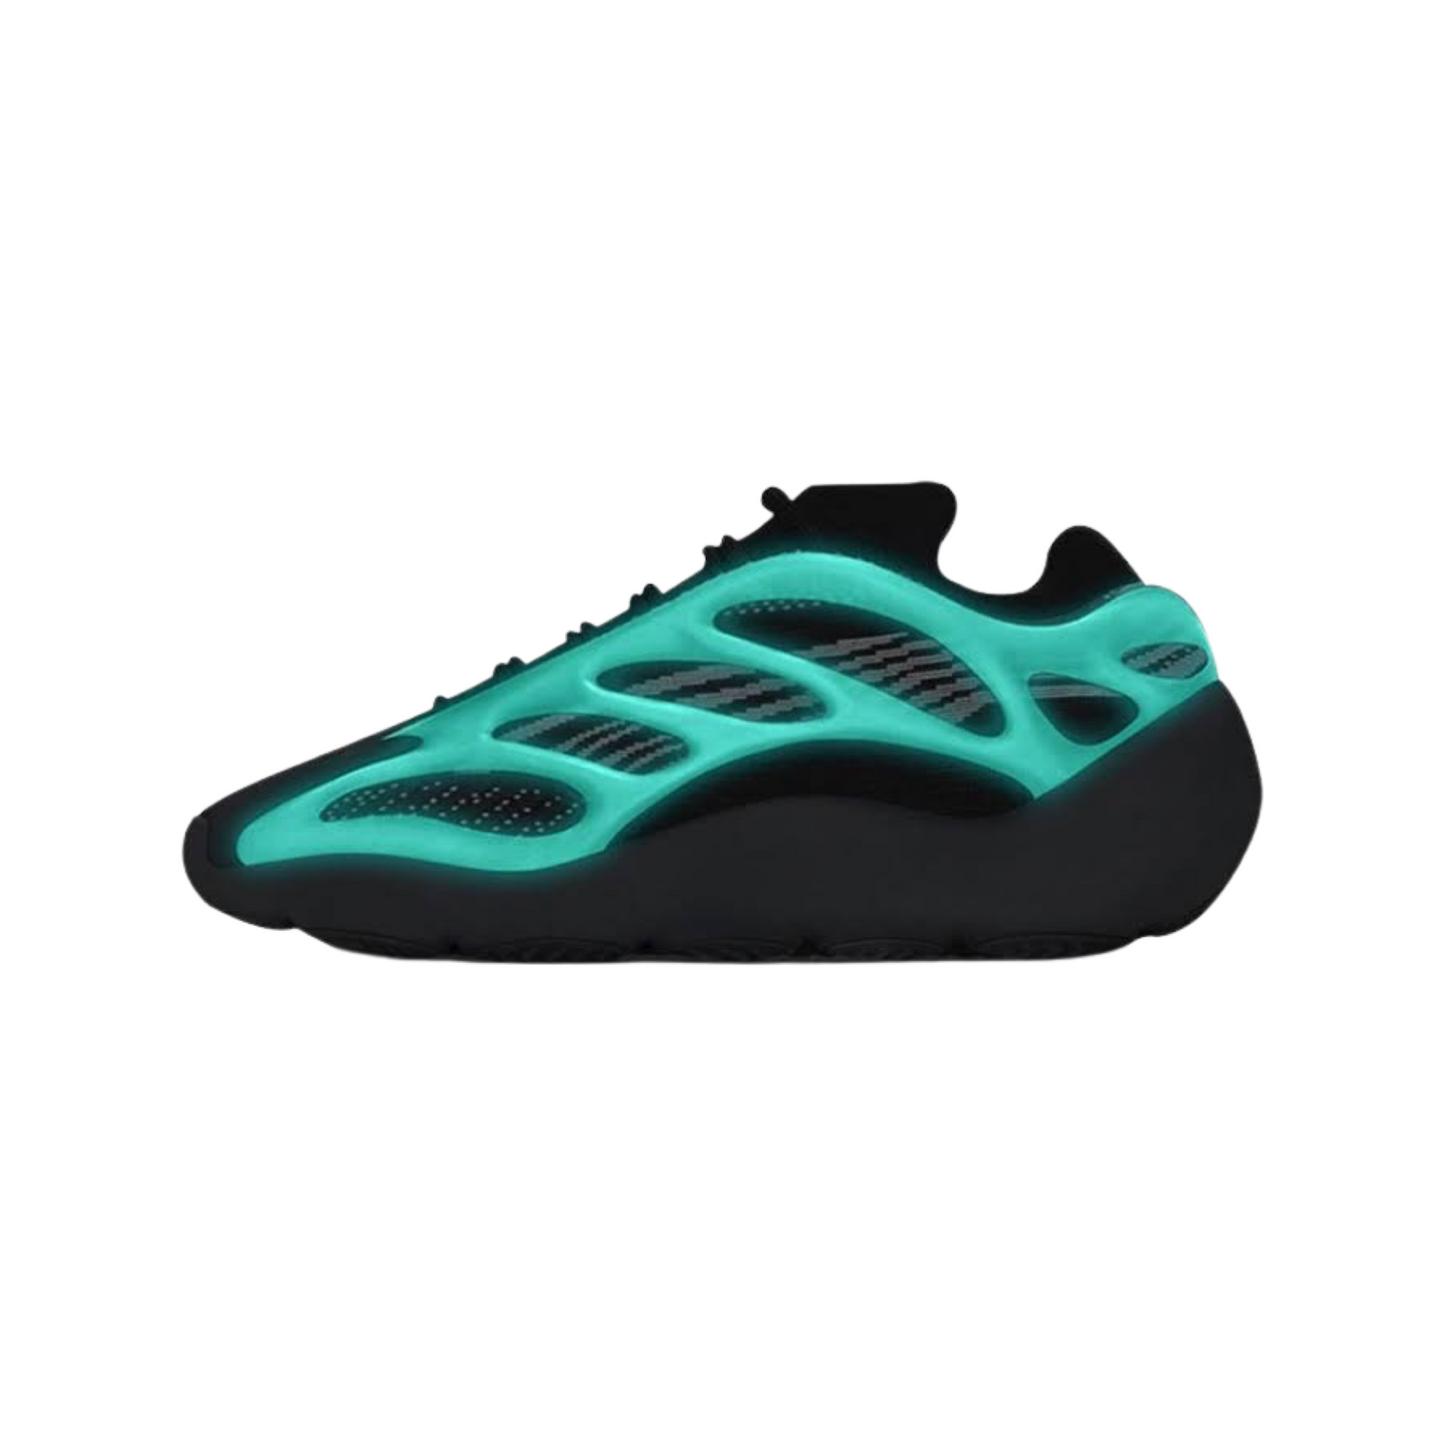 Adidas Yeezy Boost V3 700 Dark Glow